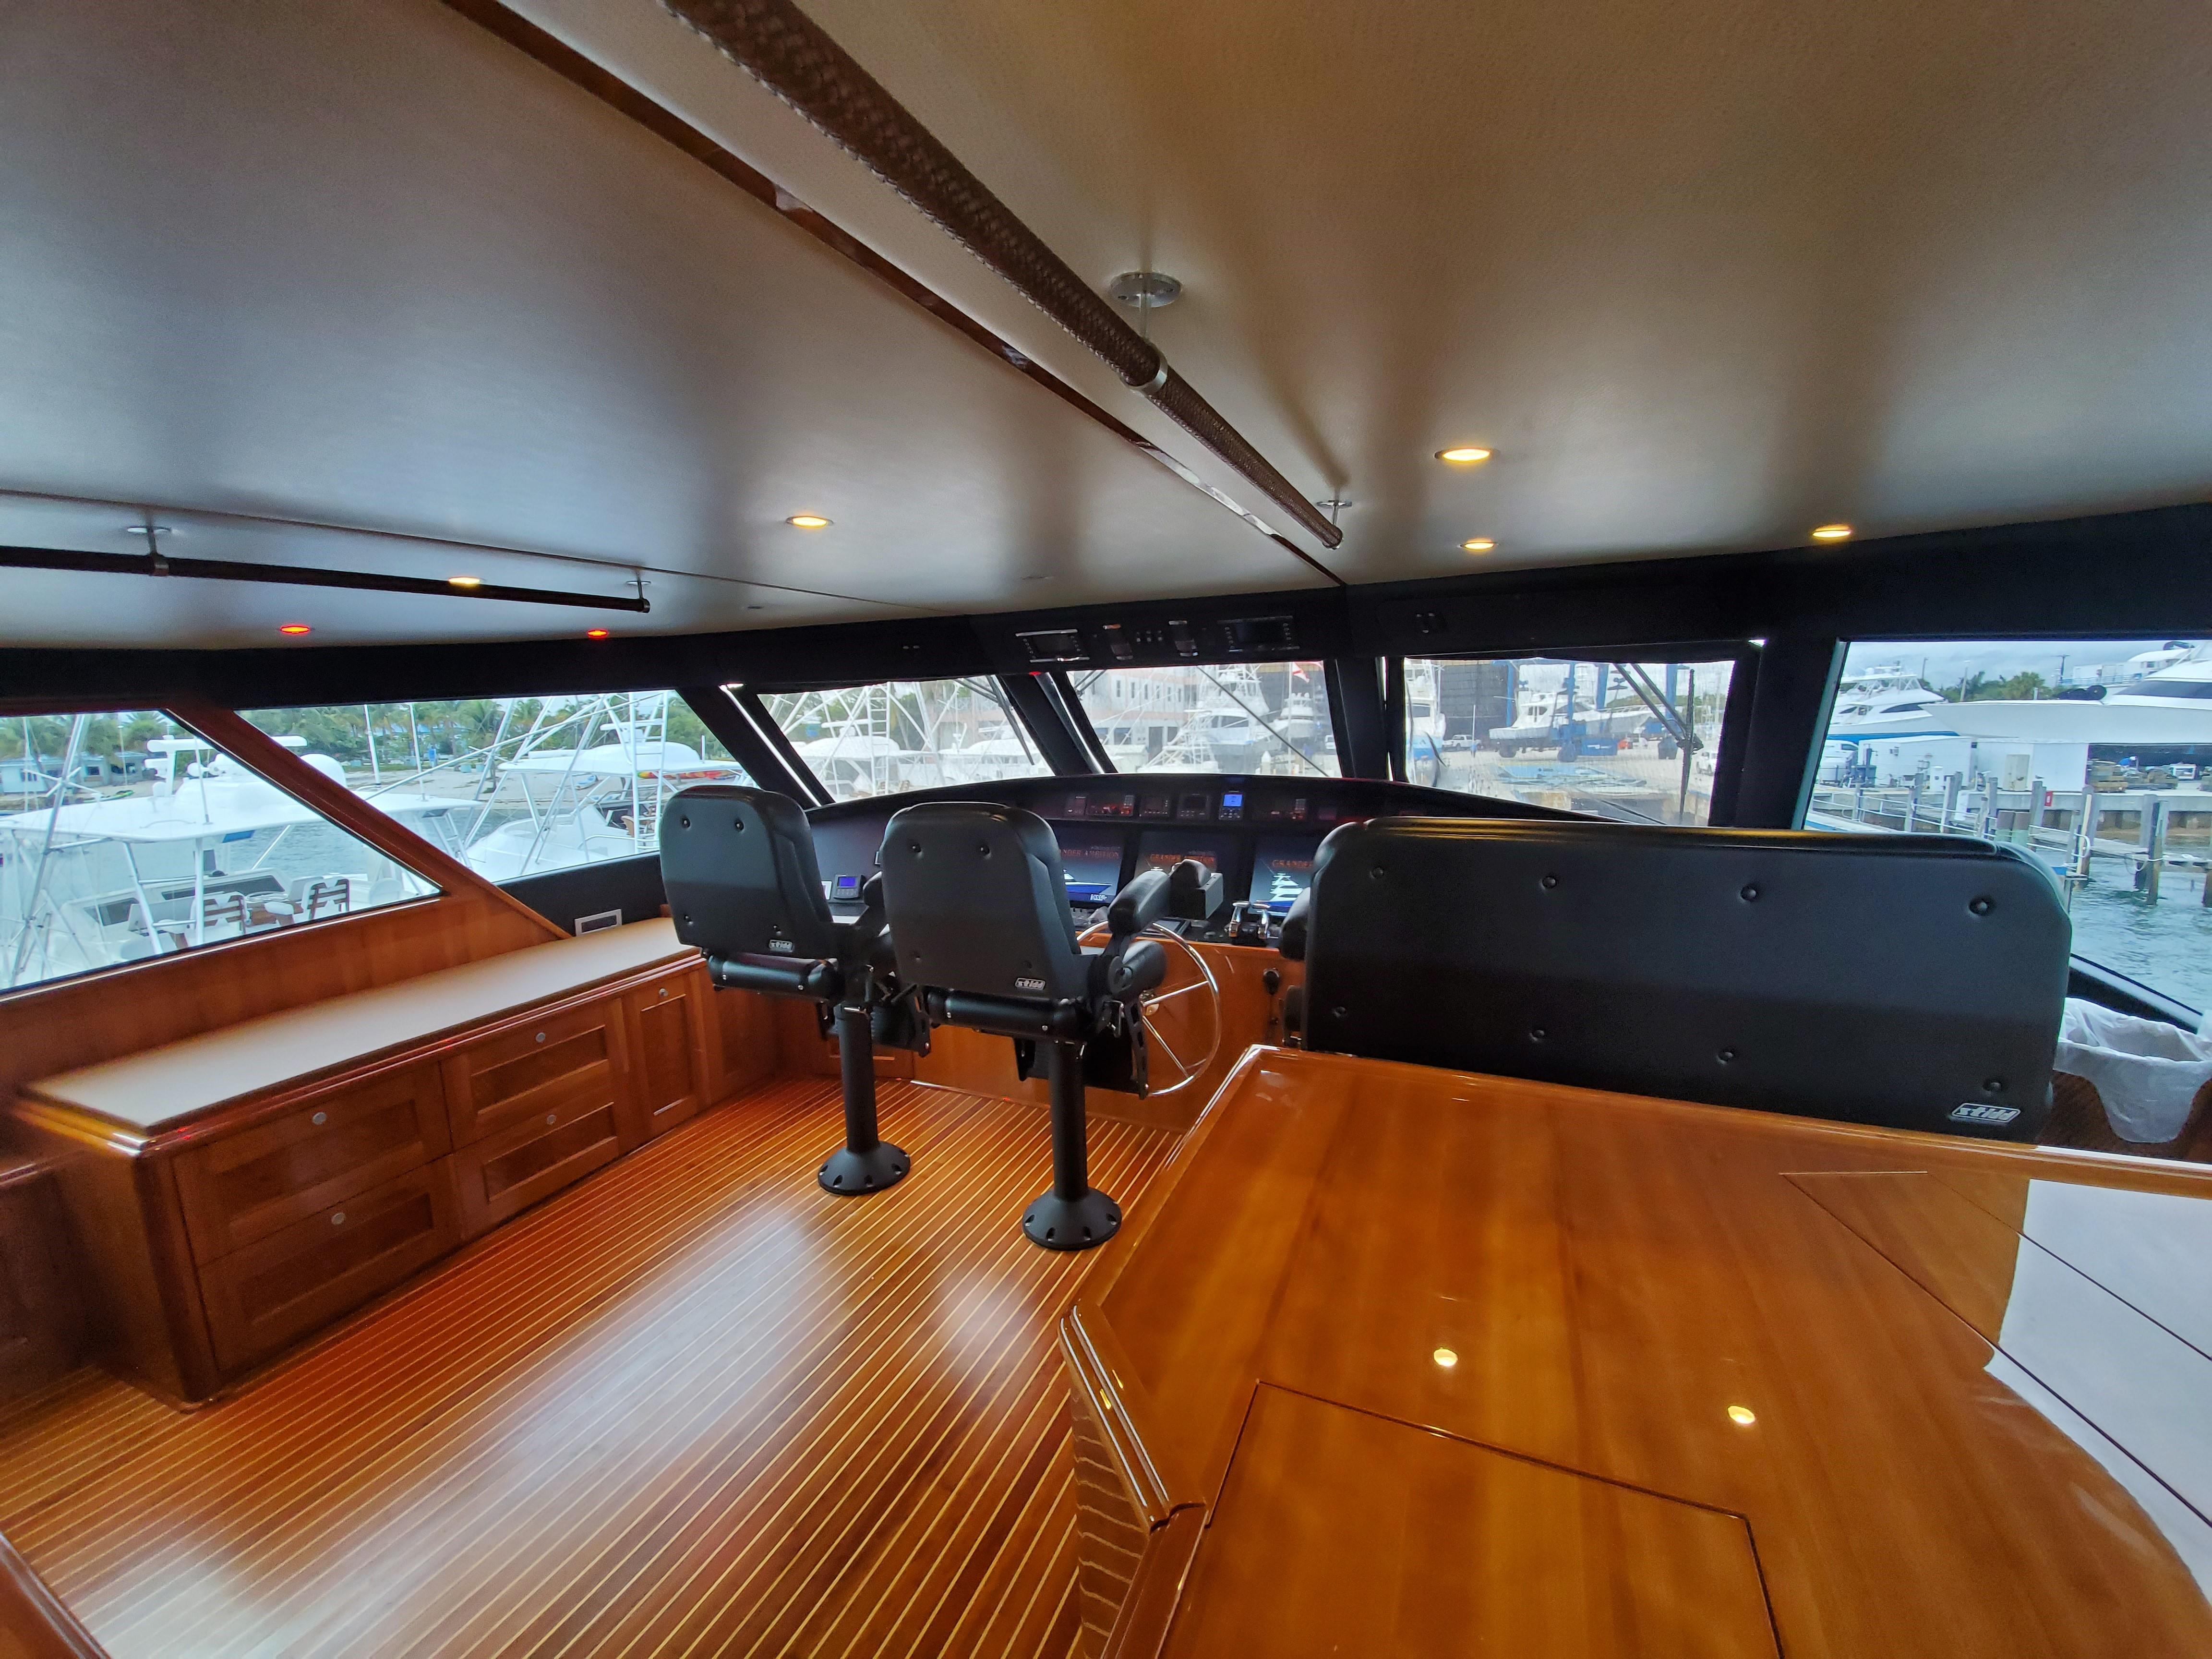 Grander Ambition Yacht Photos Pics 